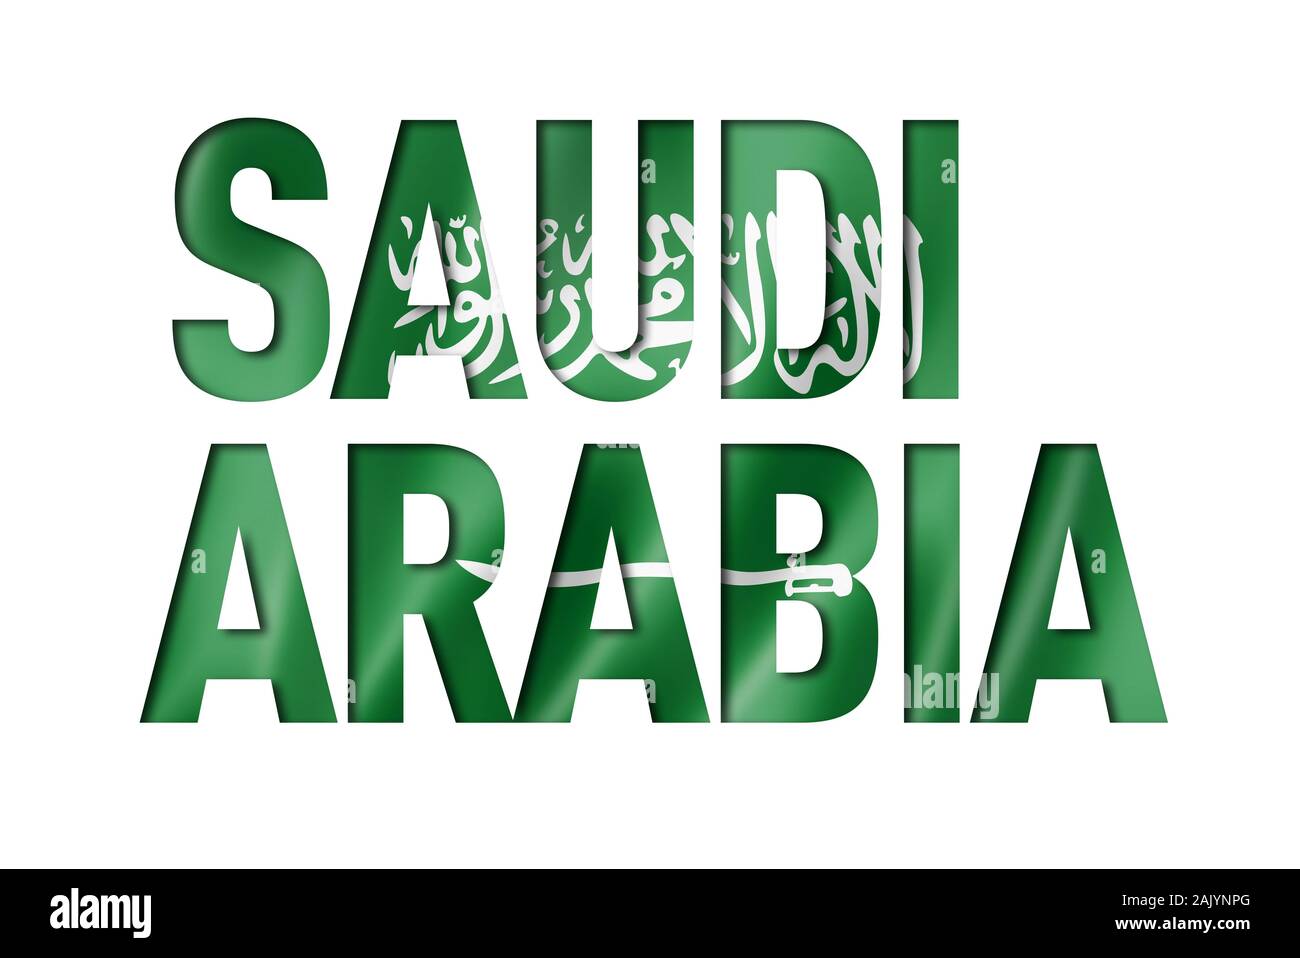 saudi arabia flag text font. nation symbol background Stock Photo